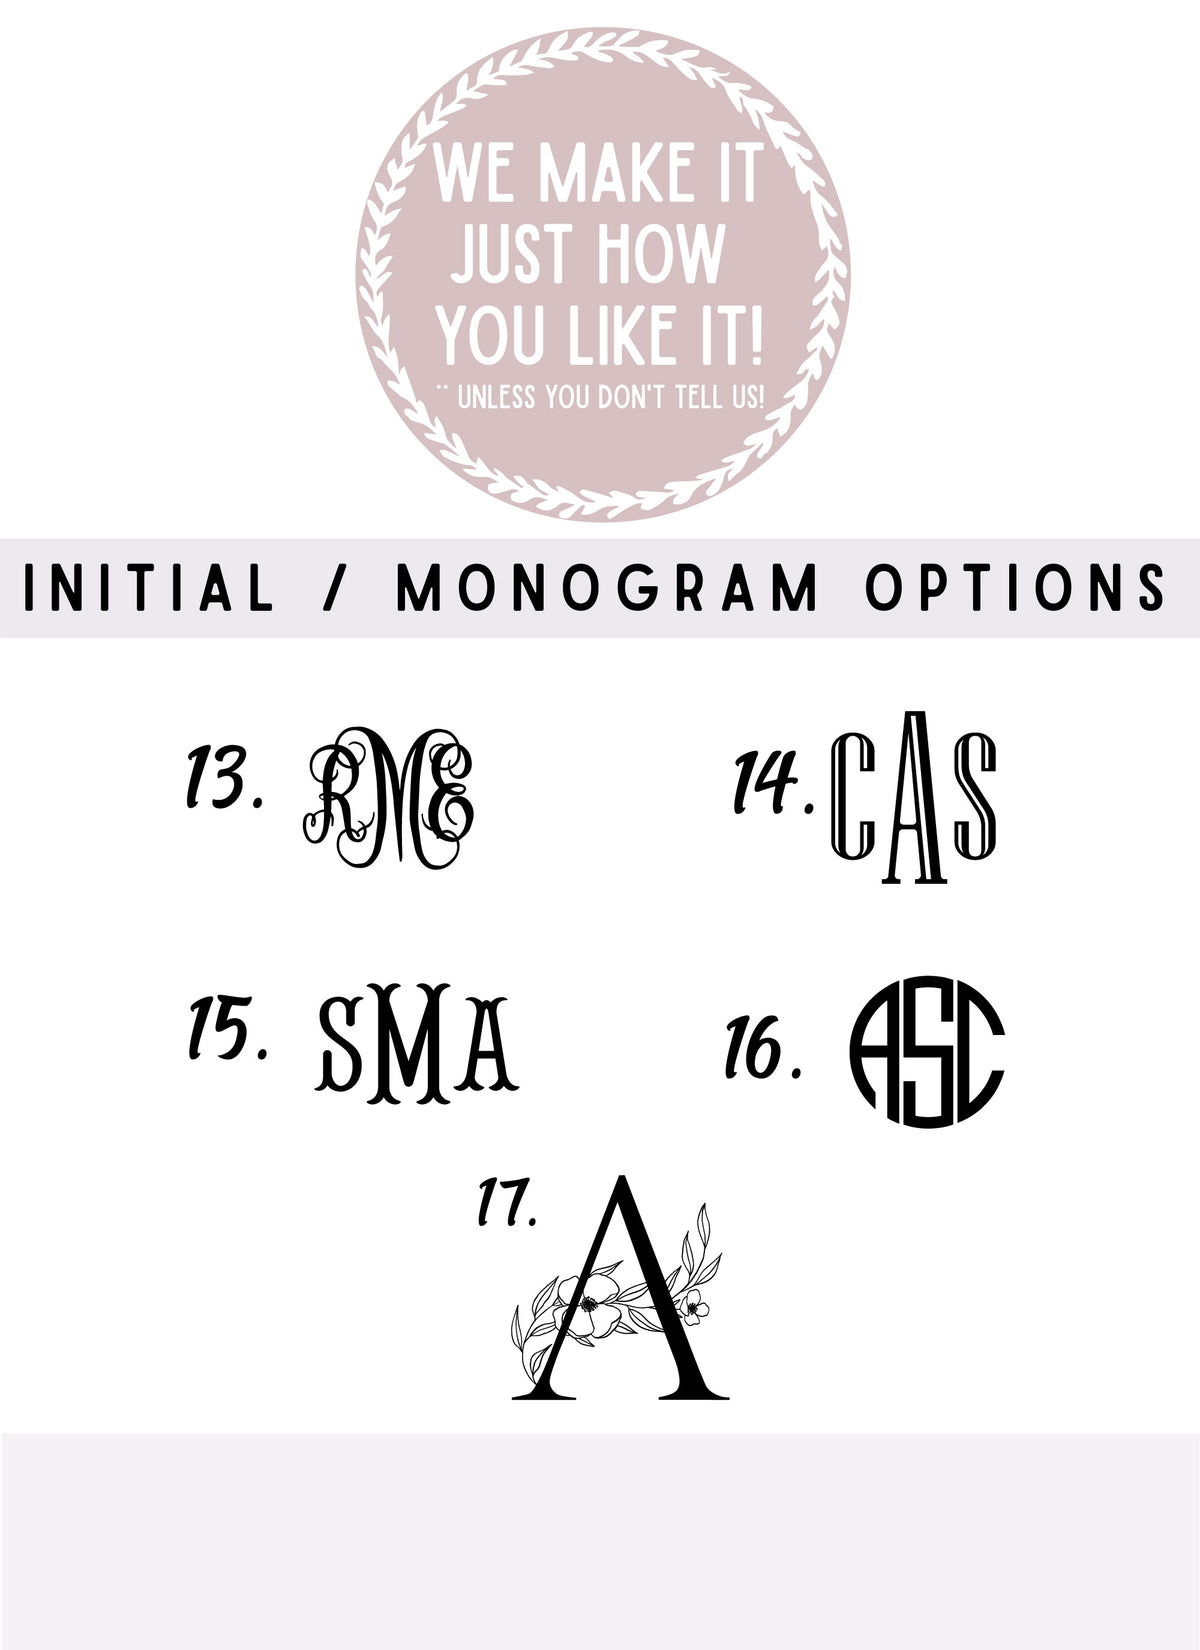 Monogrammed Tote Bags | Monogram Options